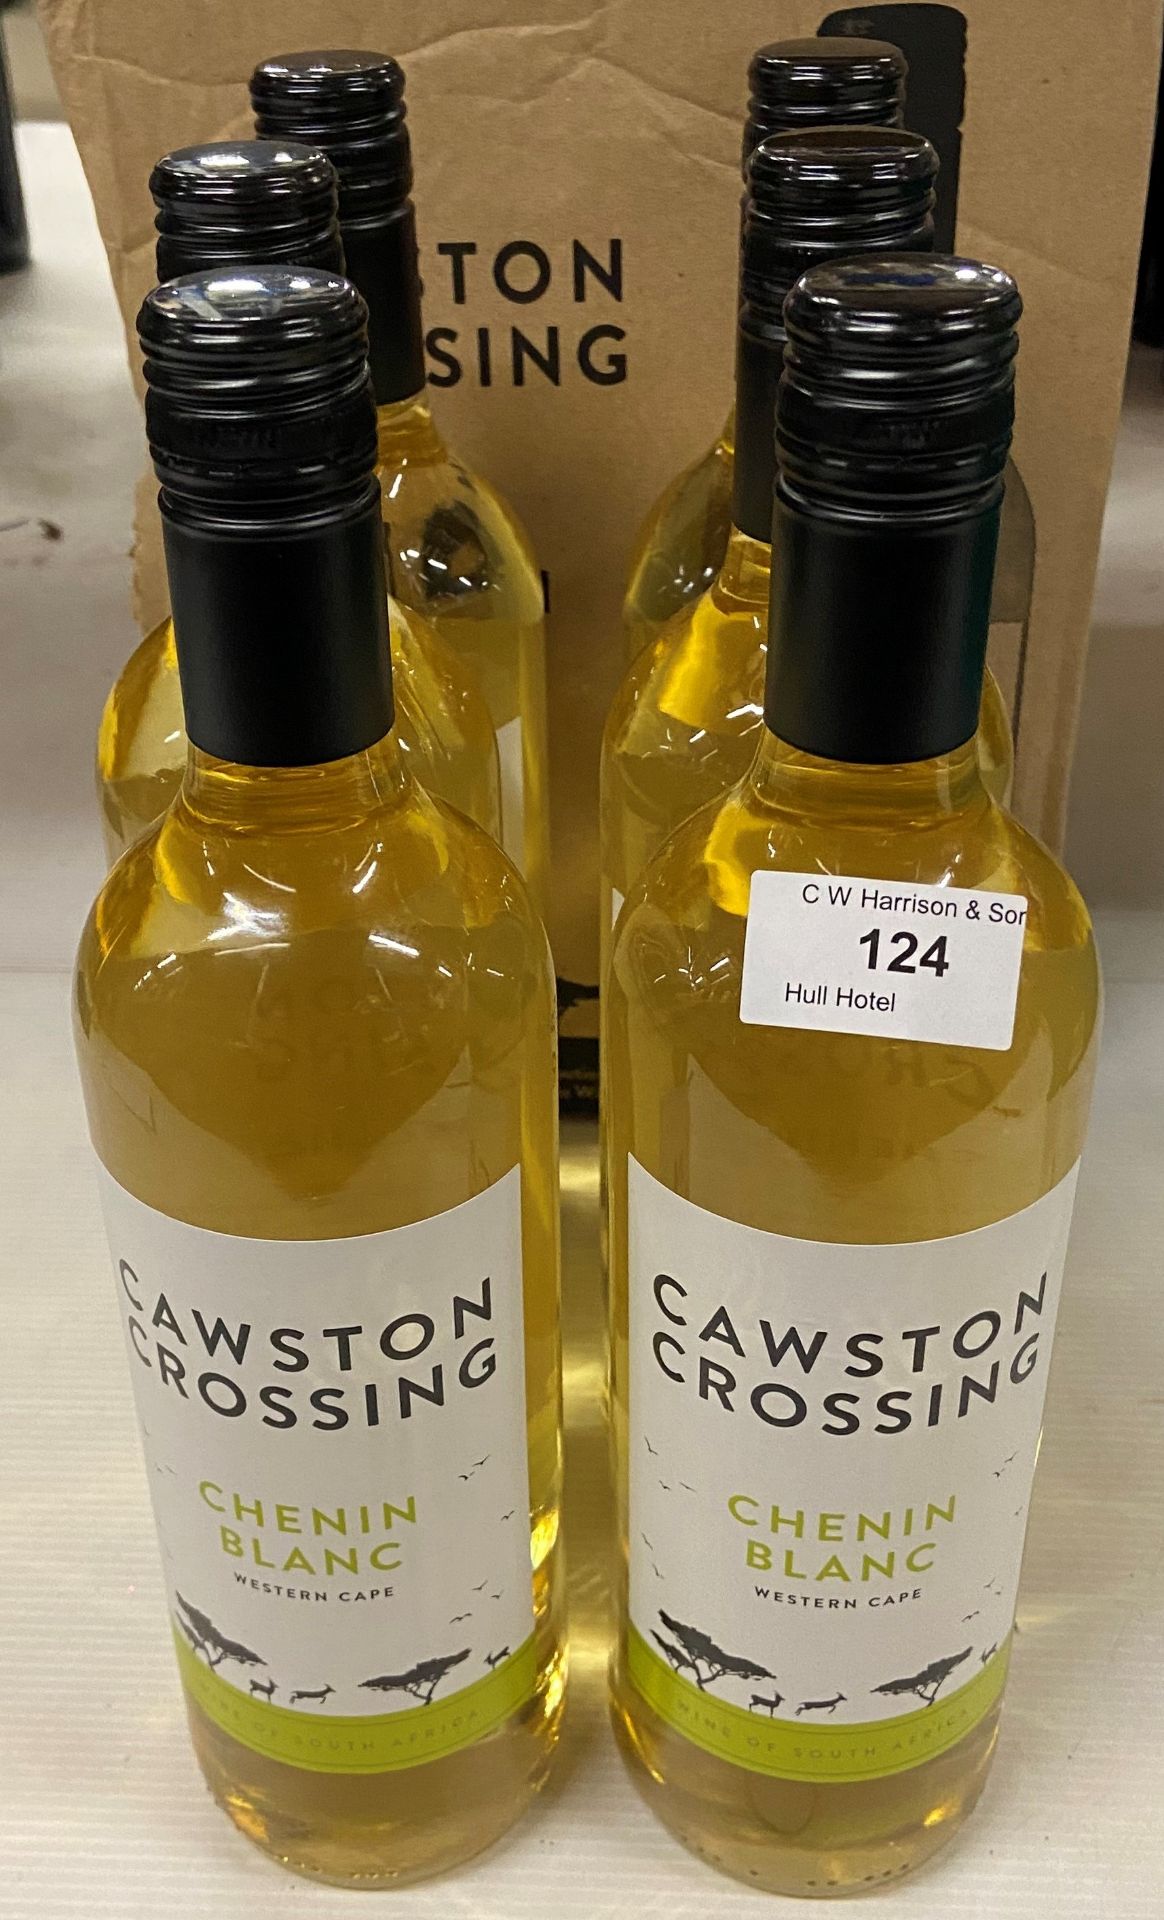 6 x 75cl bottles of Cawston Crossing Chenin Blanc Wesrn Cape wine